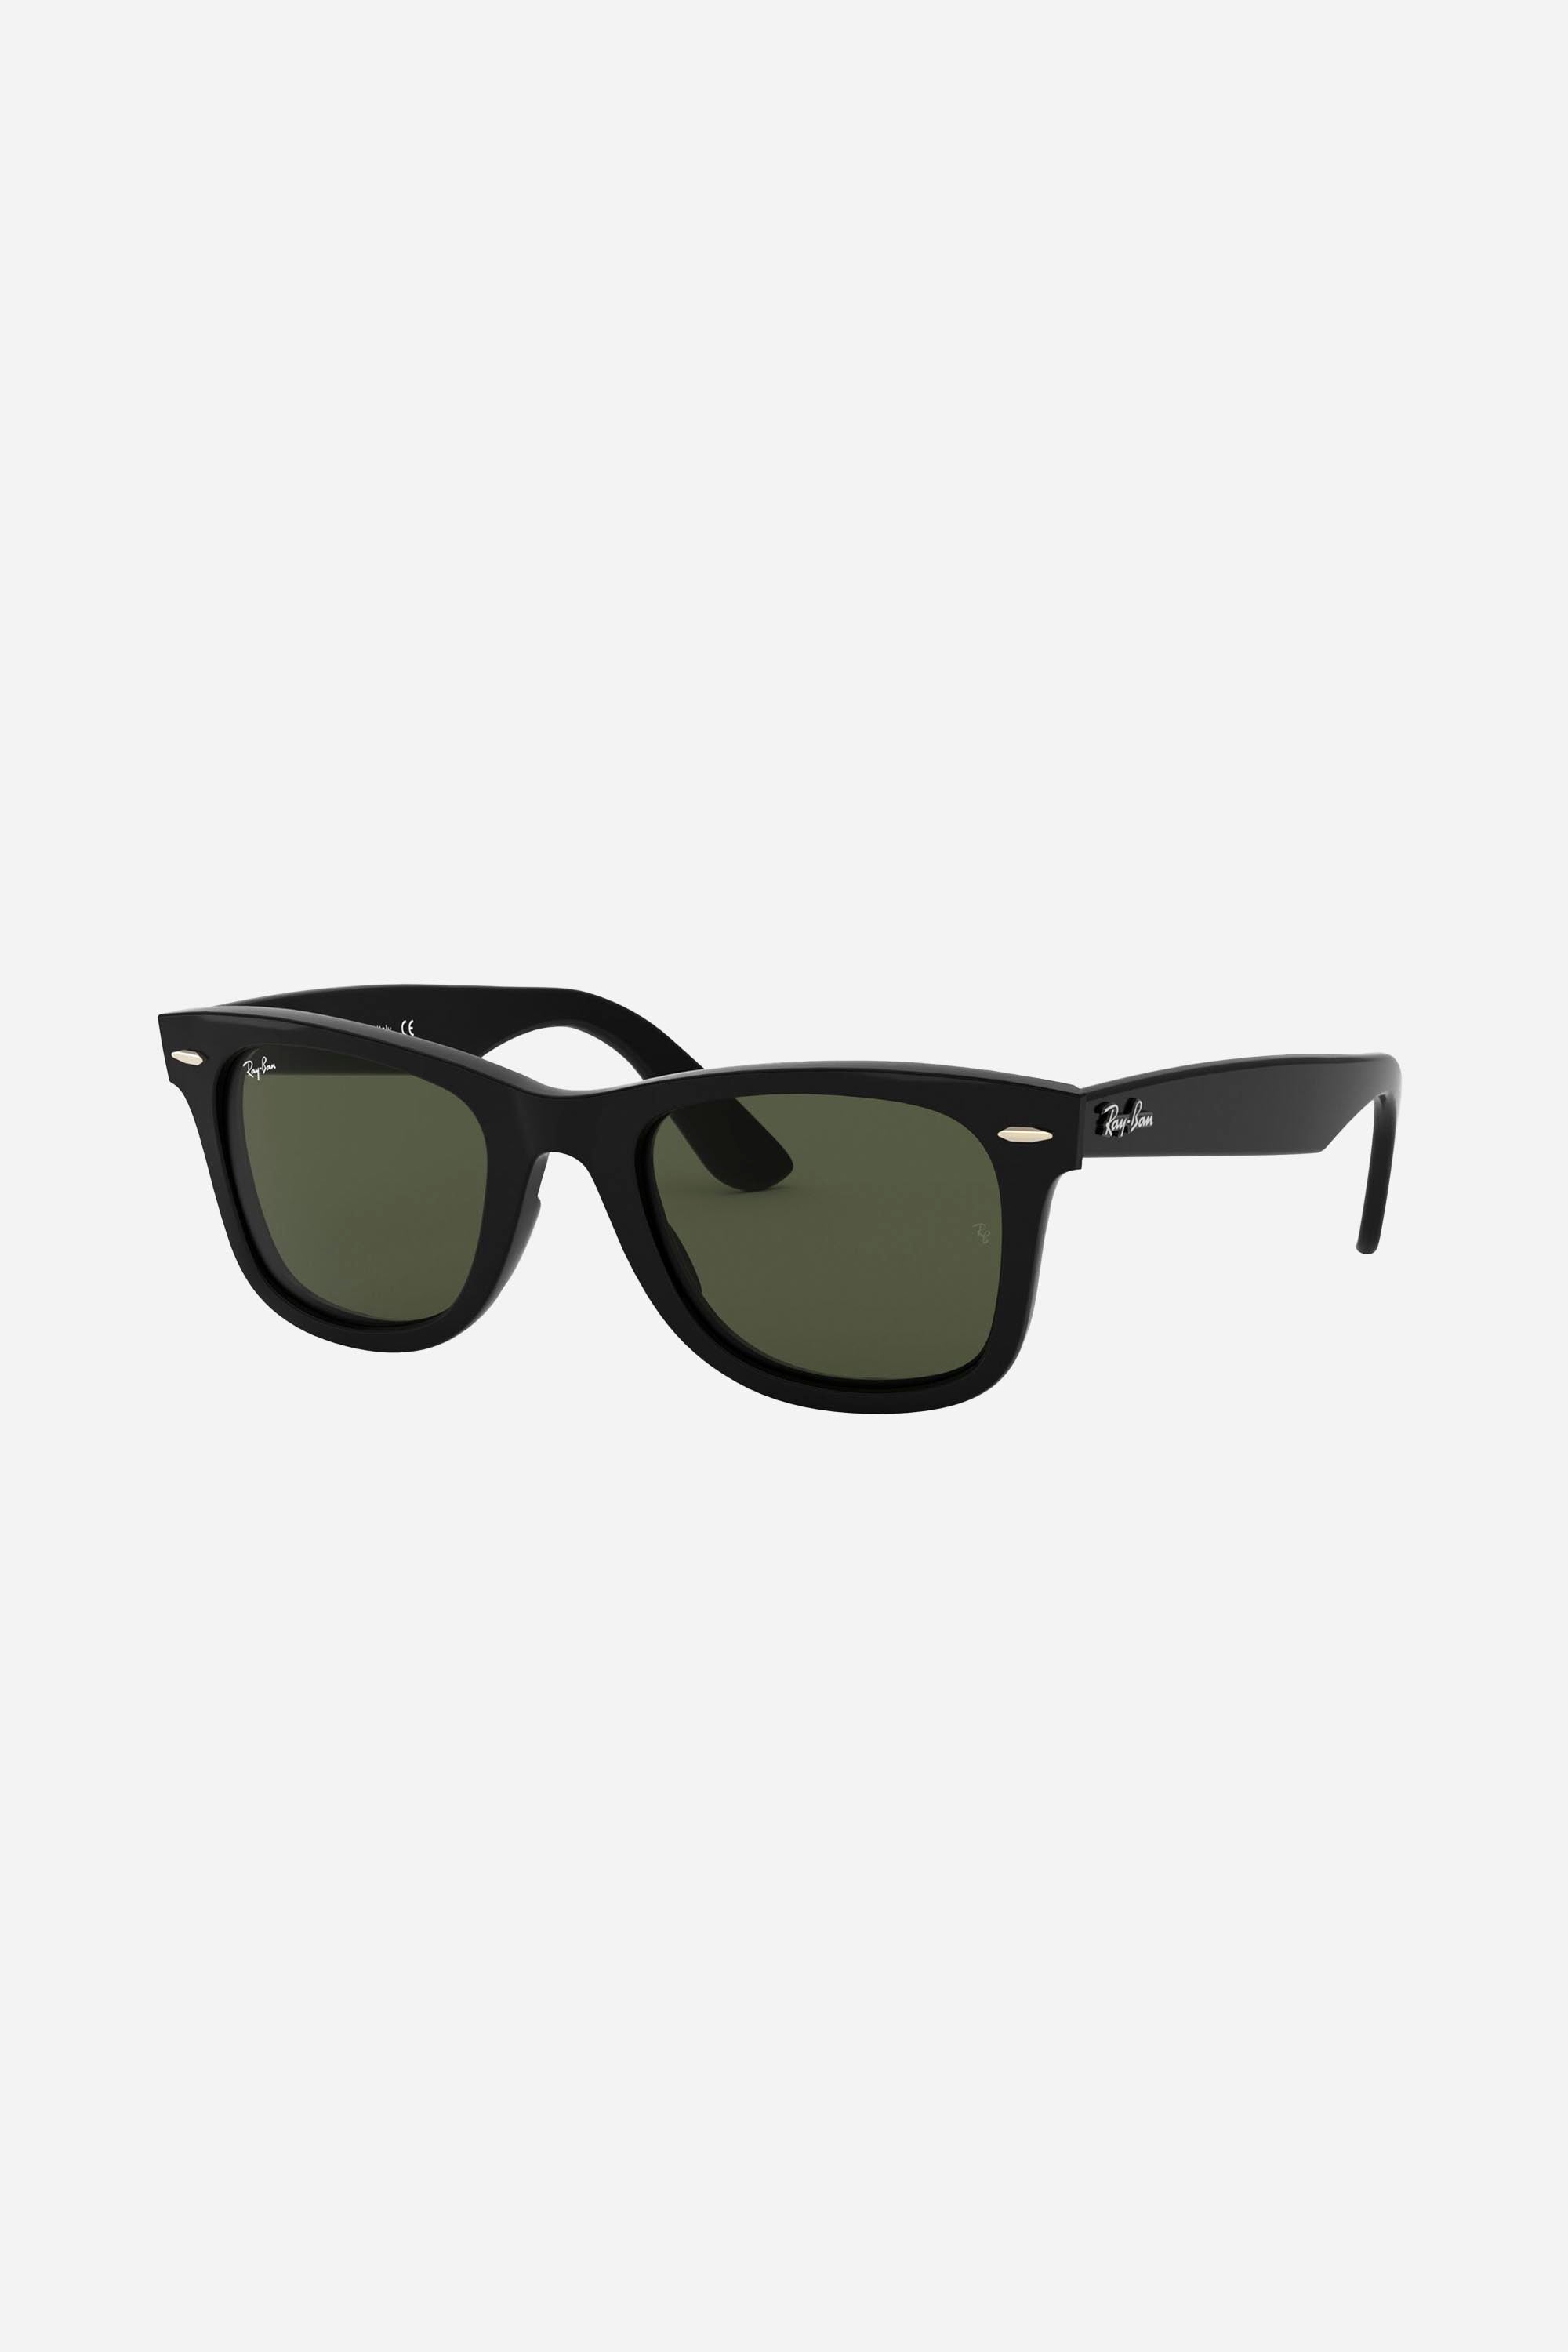 Ray Ban RB4340 wayfarer black sunglasses - Eyewear Club